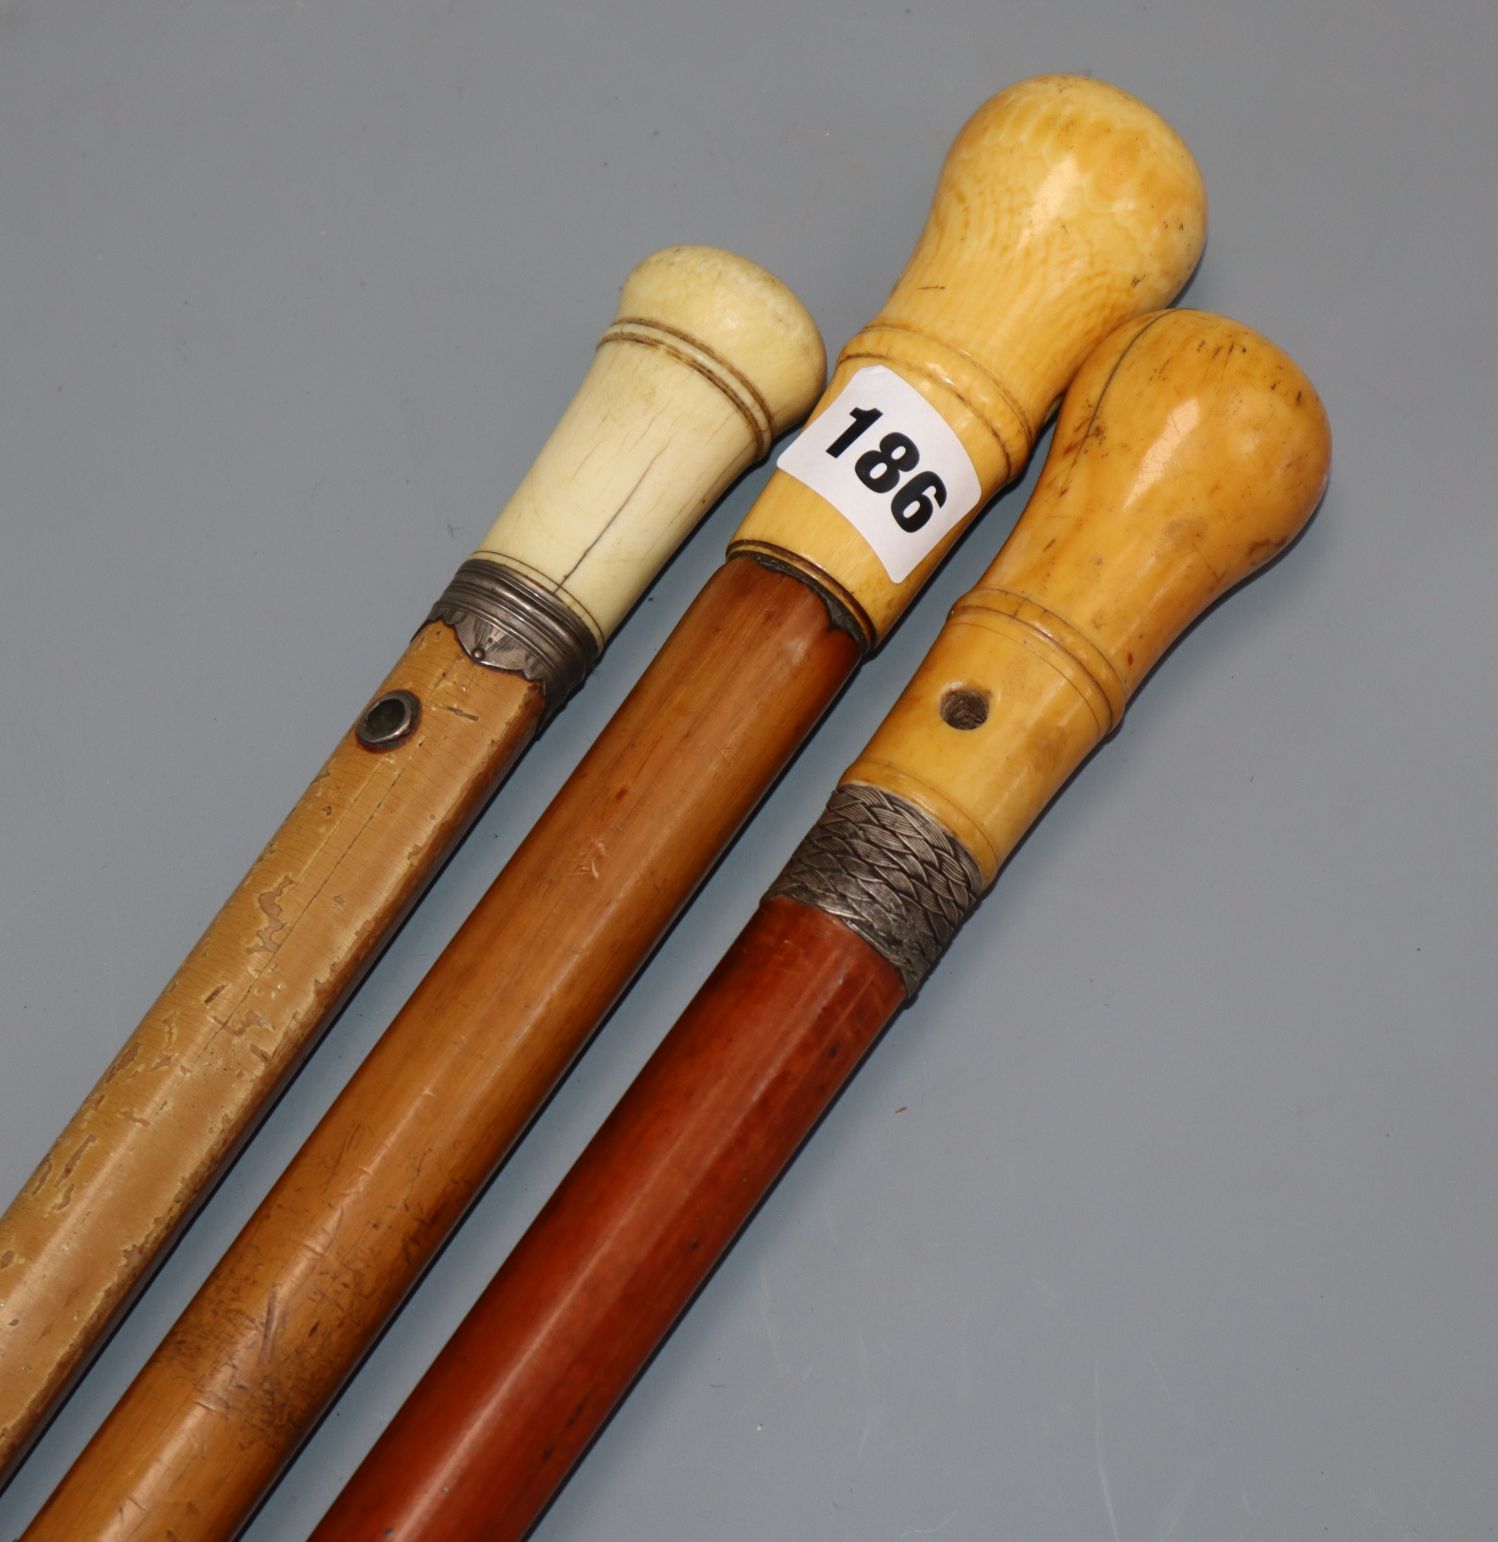 Three ivory handled malacca walking canes longest 91cm